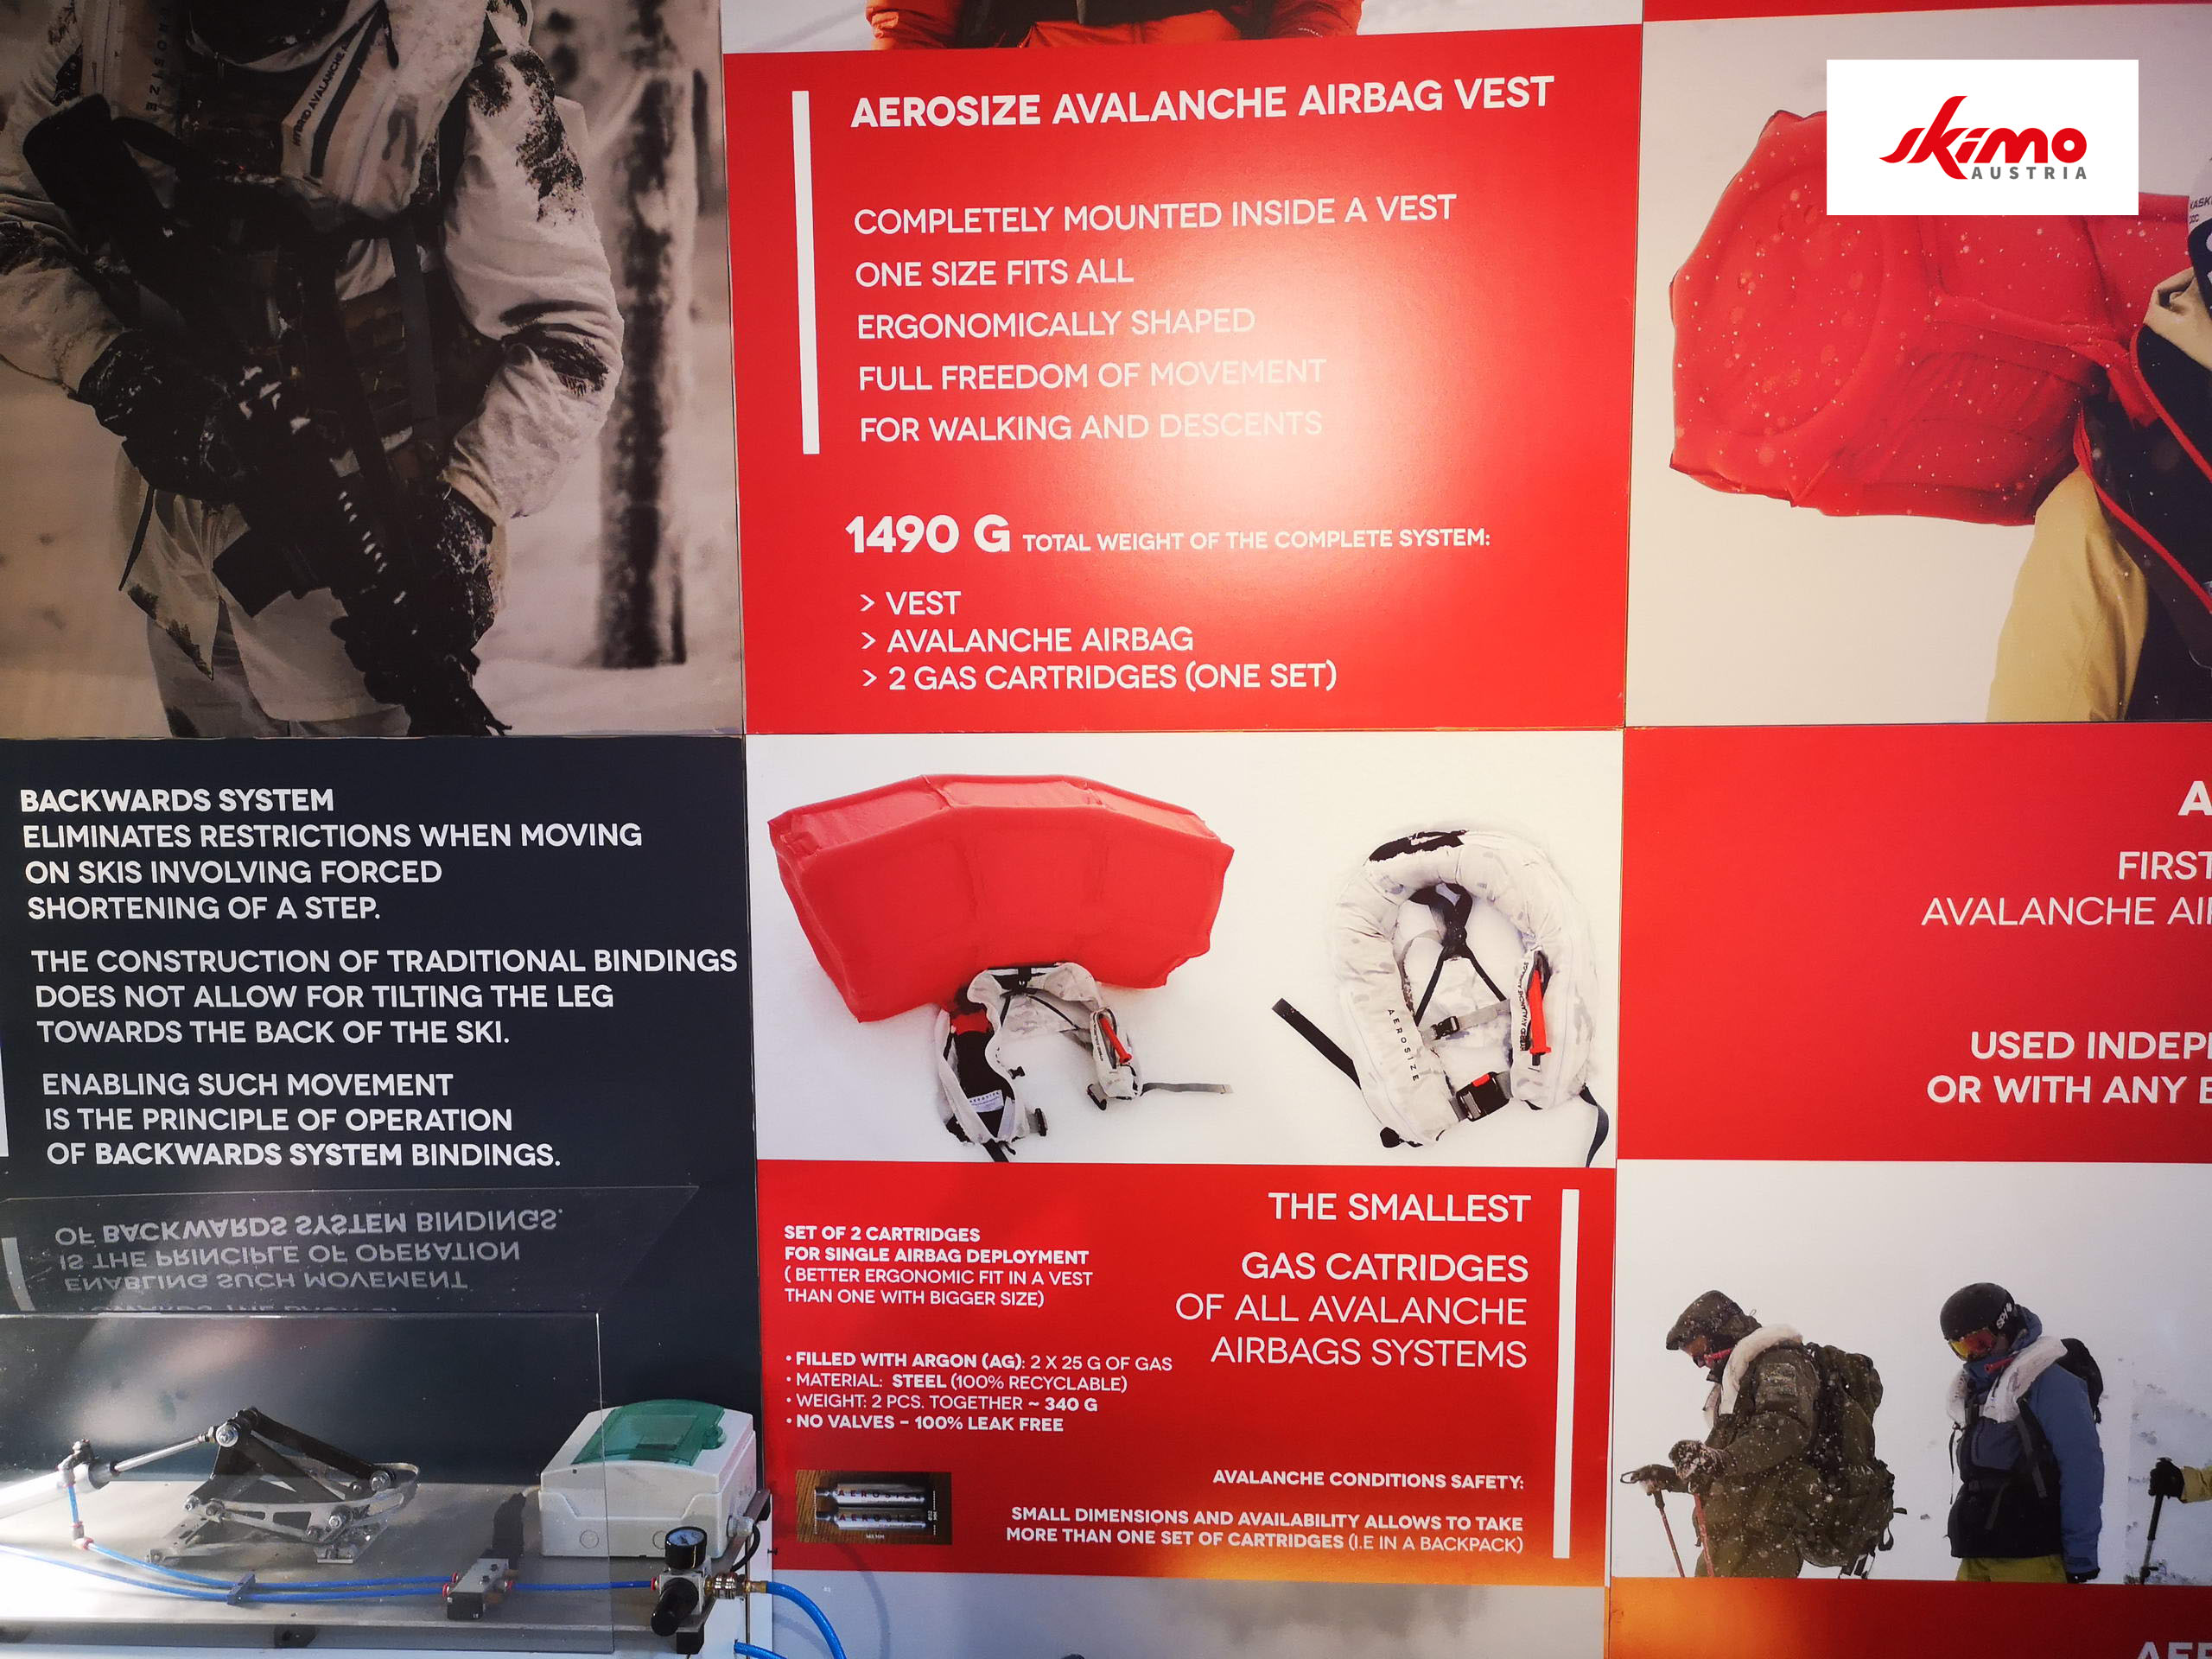 ISPO 2019 Aerosize technische Daten Bild Karl Posch SKIMO Austria